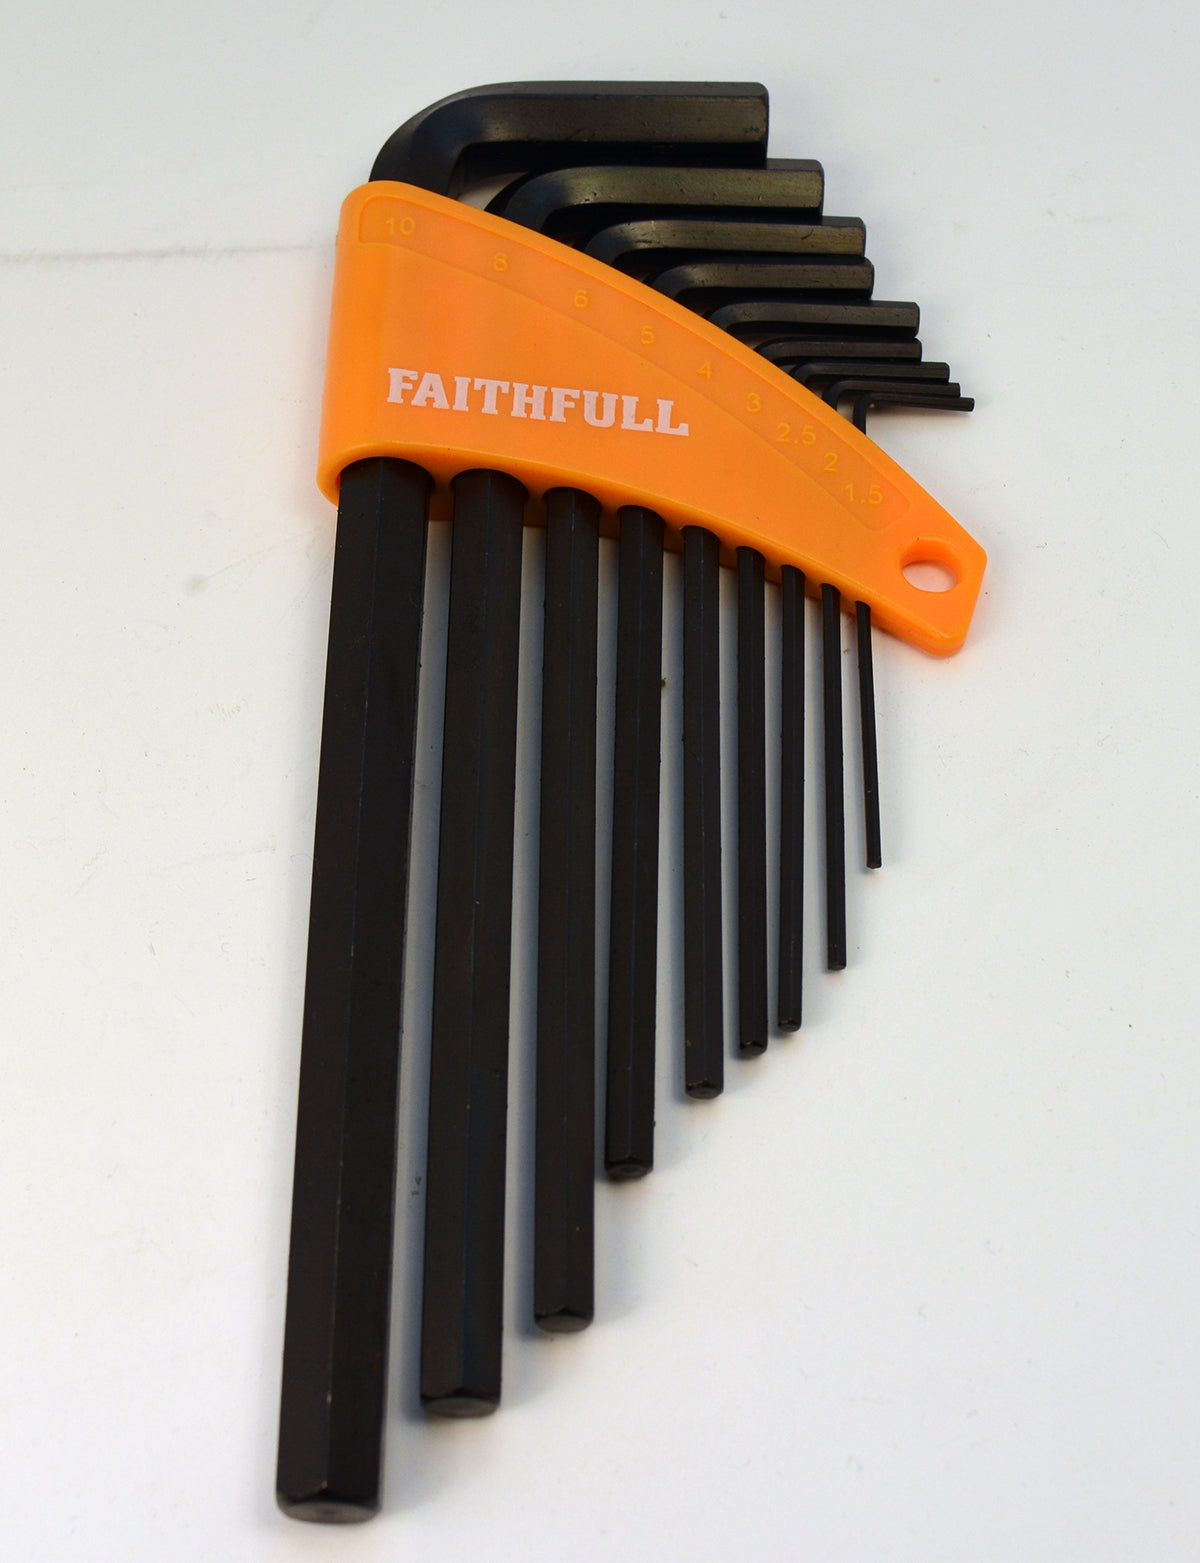 Faithfull Tools Hex Key Set Of 9 Metric